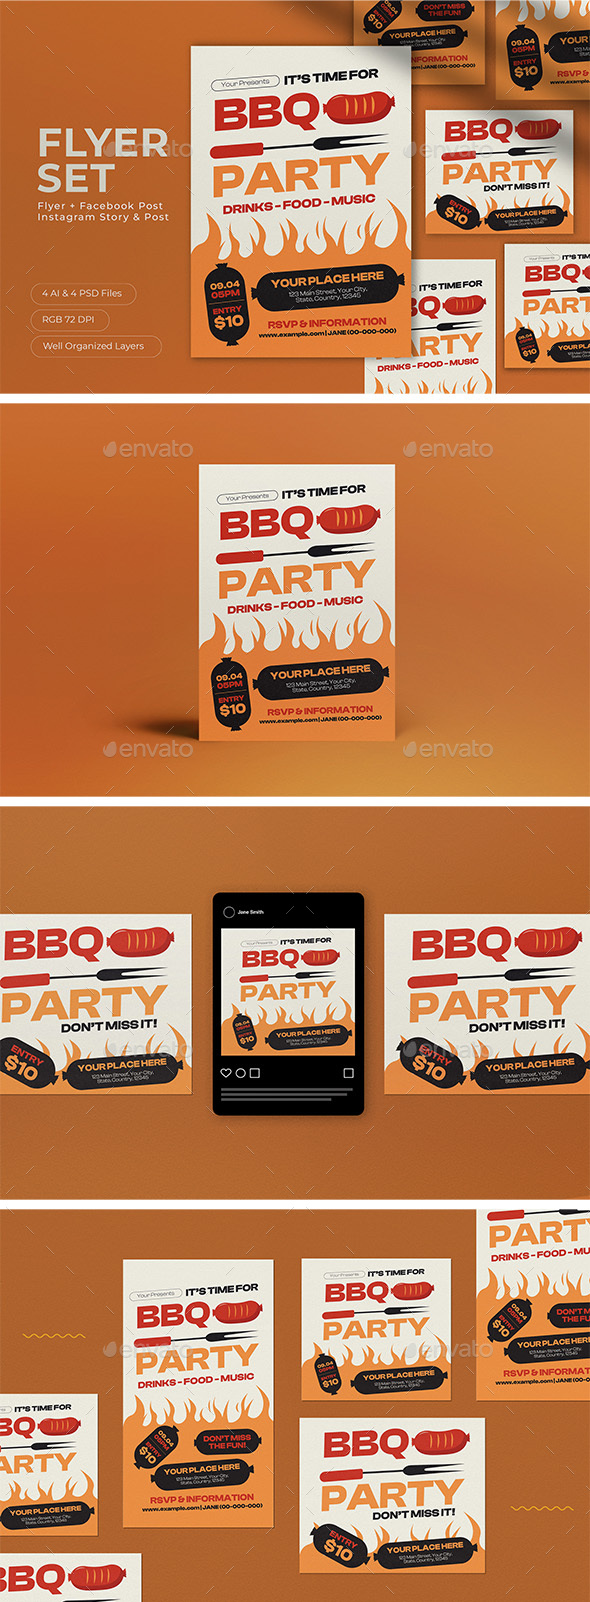 Orange Flat Design BBQ Party Flyer Set